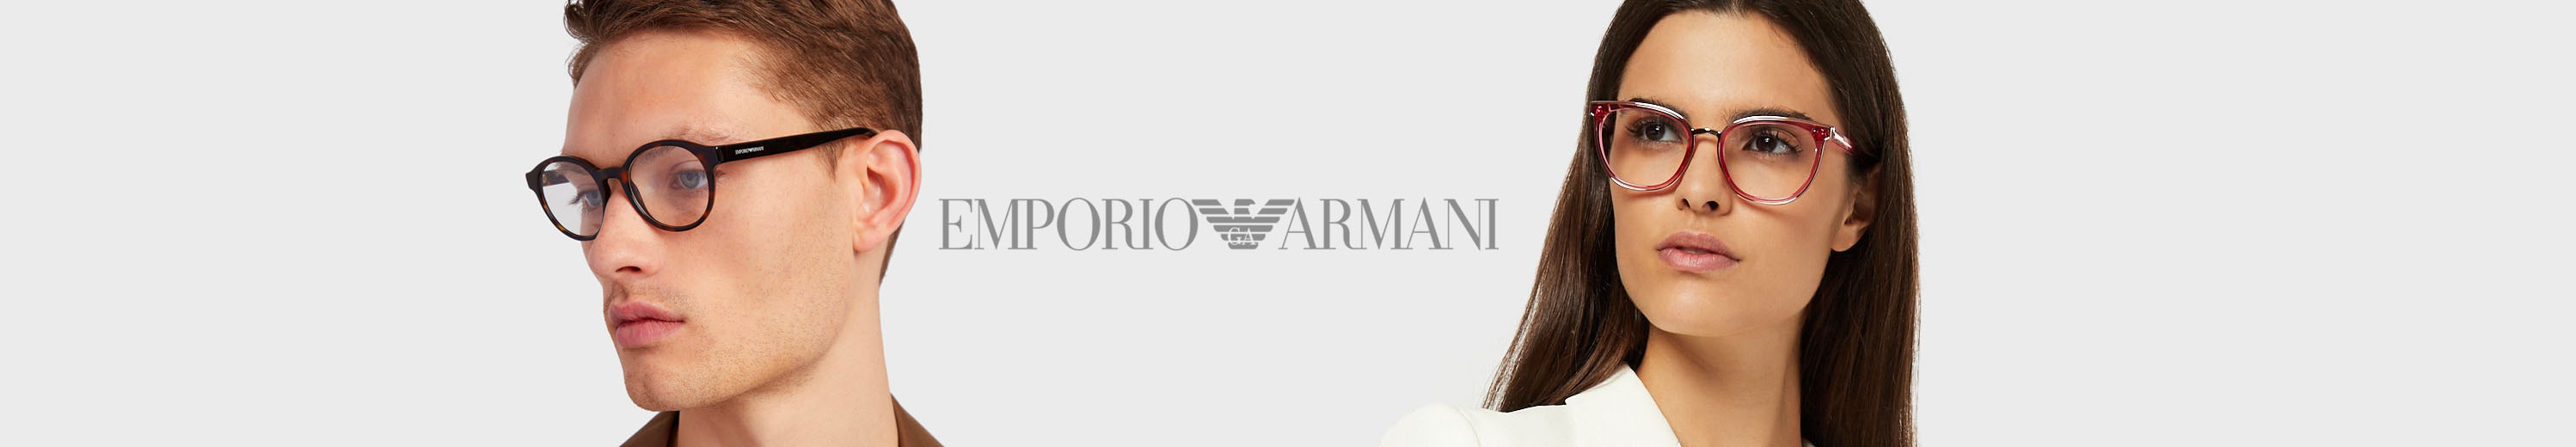 Emporio Armani Eyeglasses